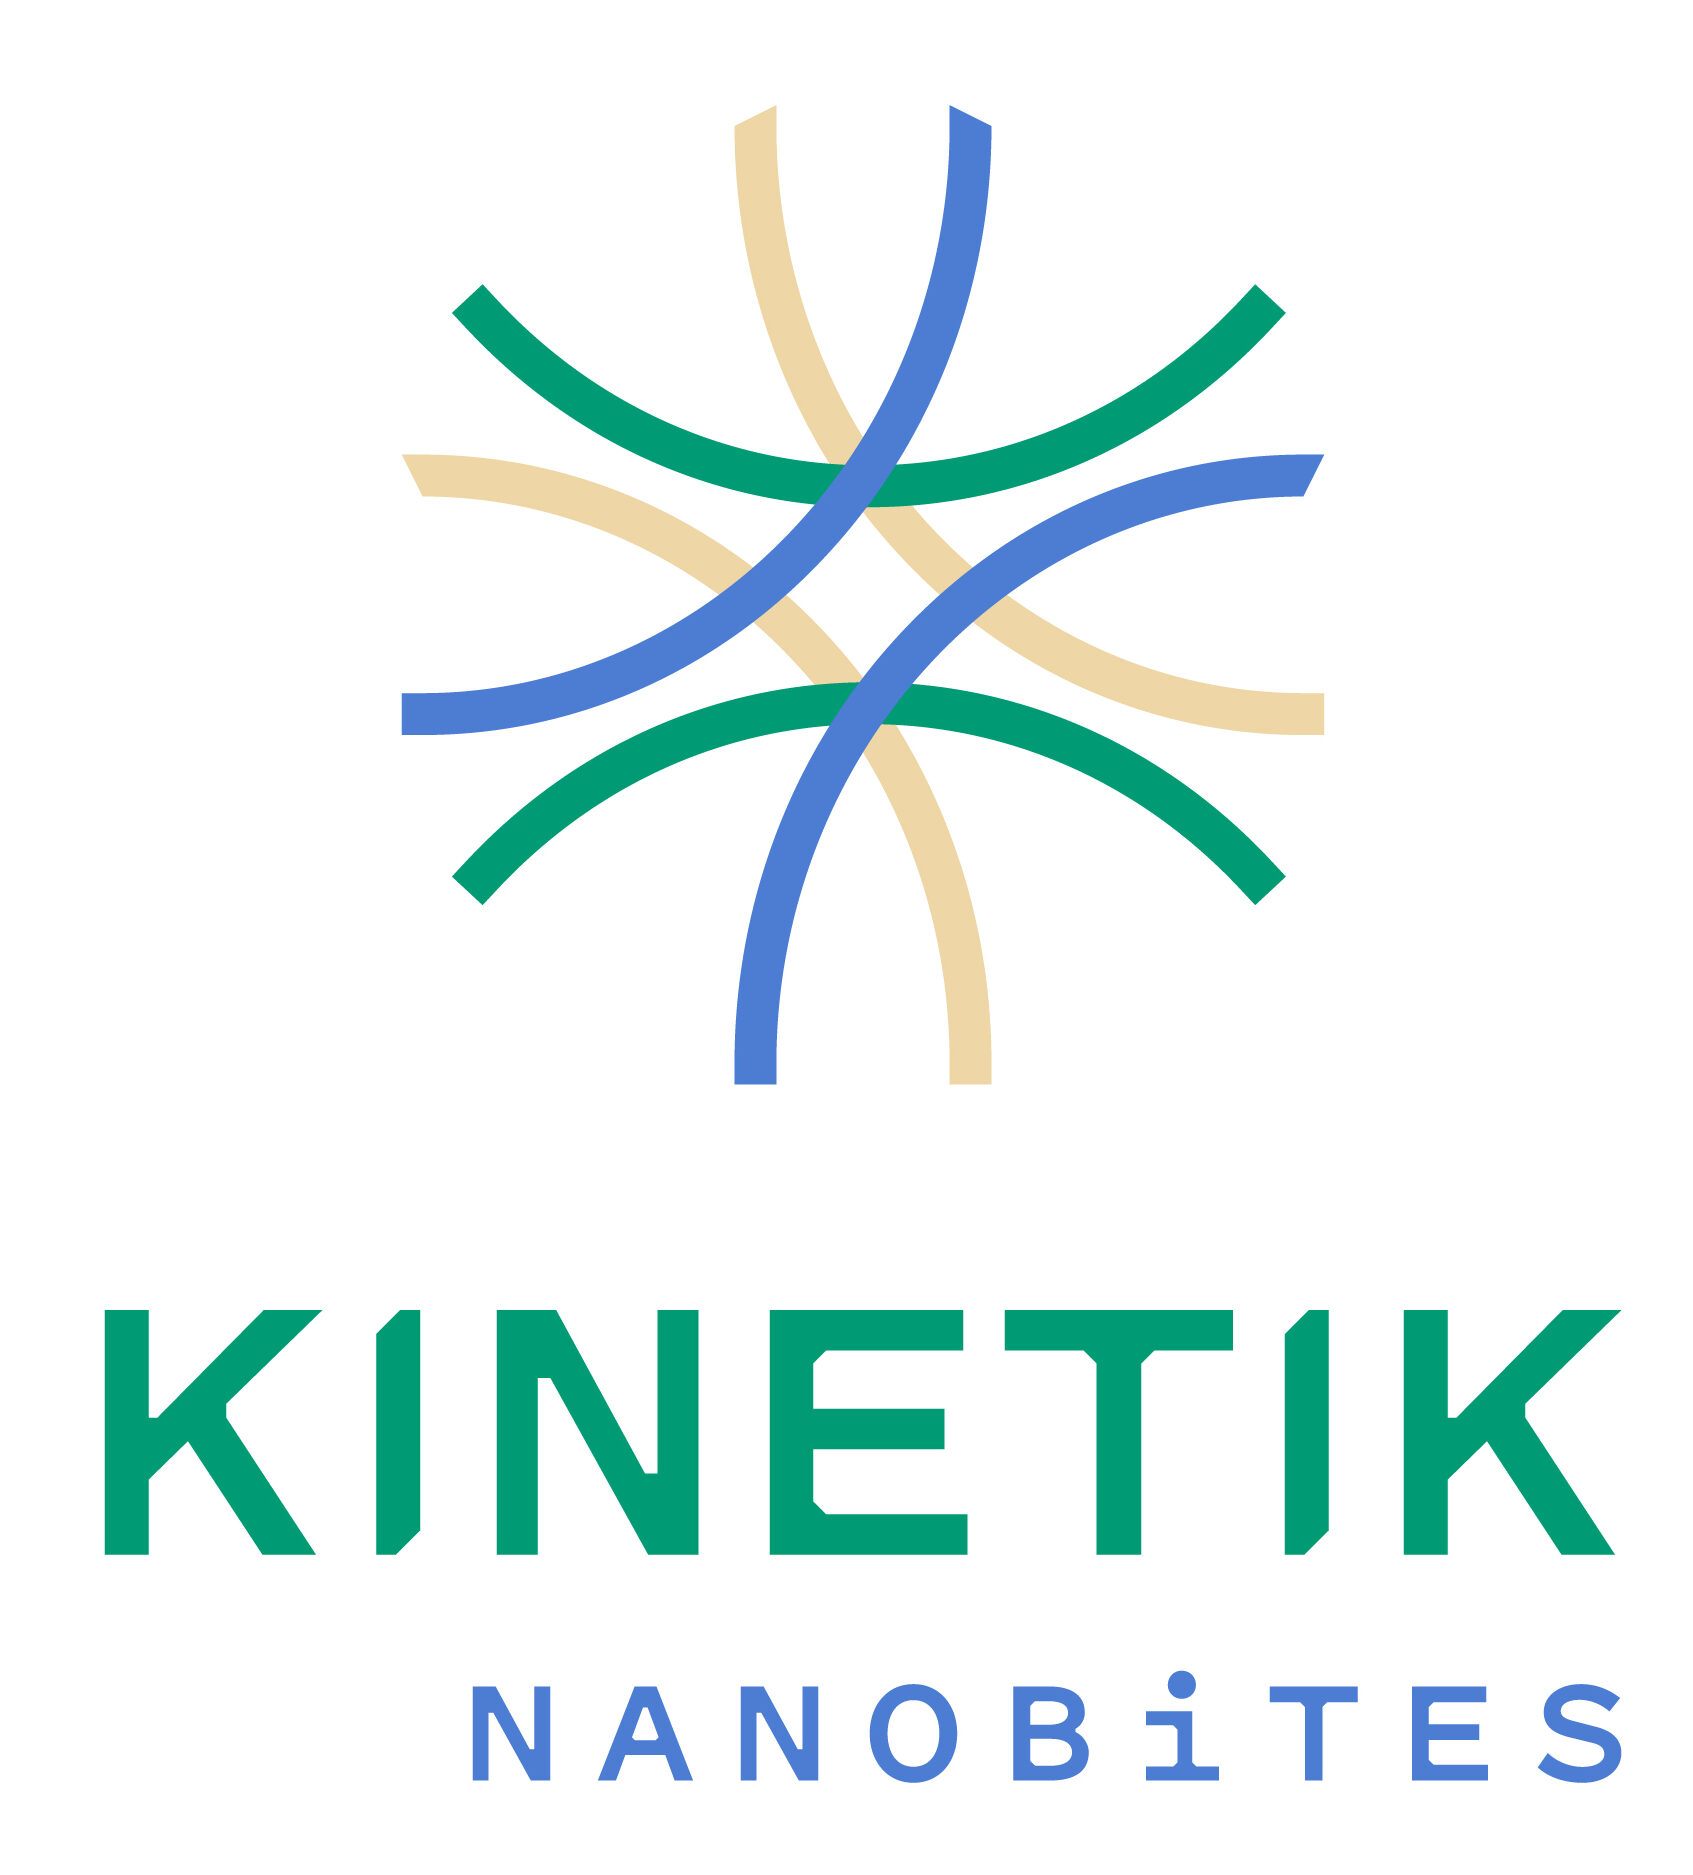 Kinetik nanobites logo final version